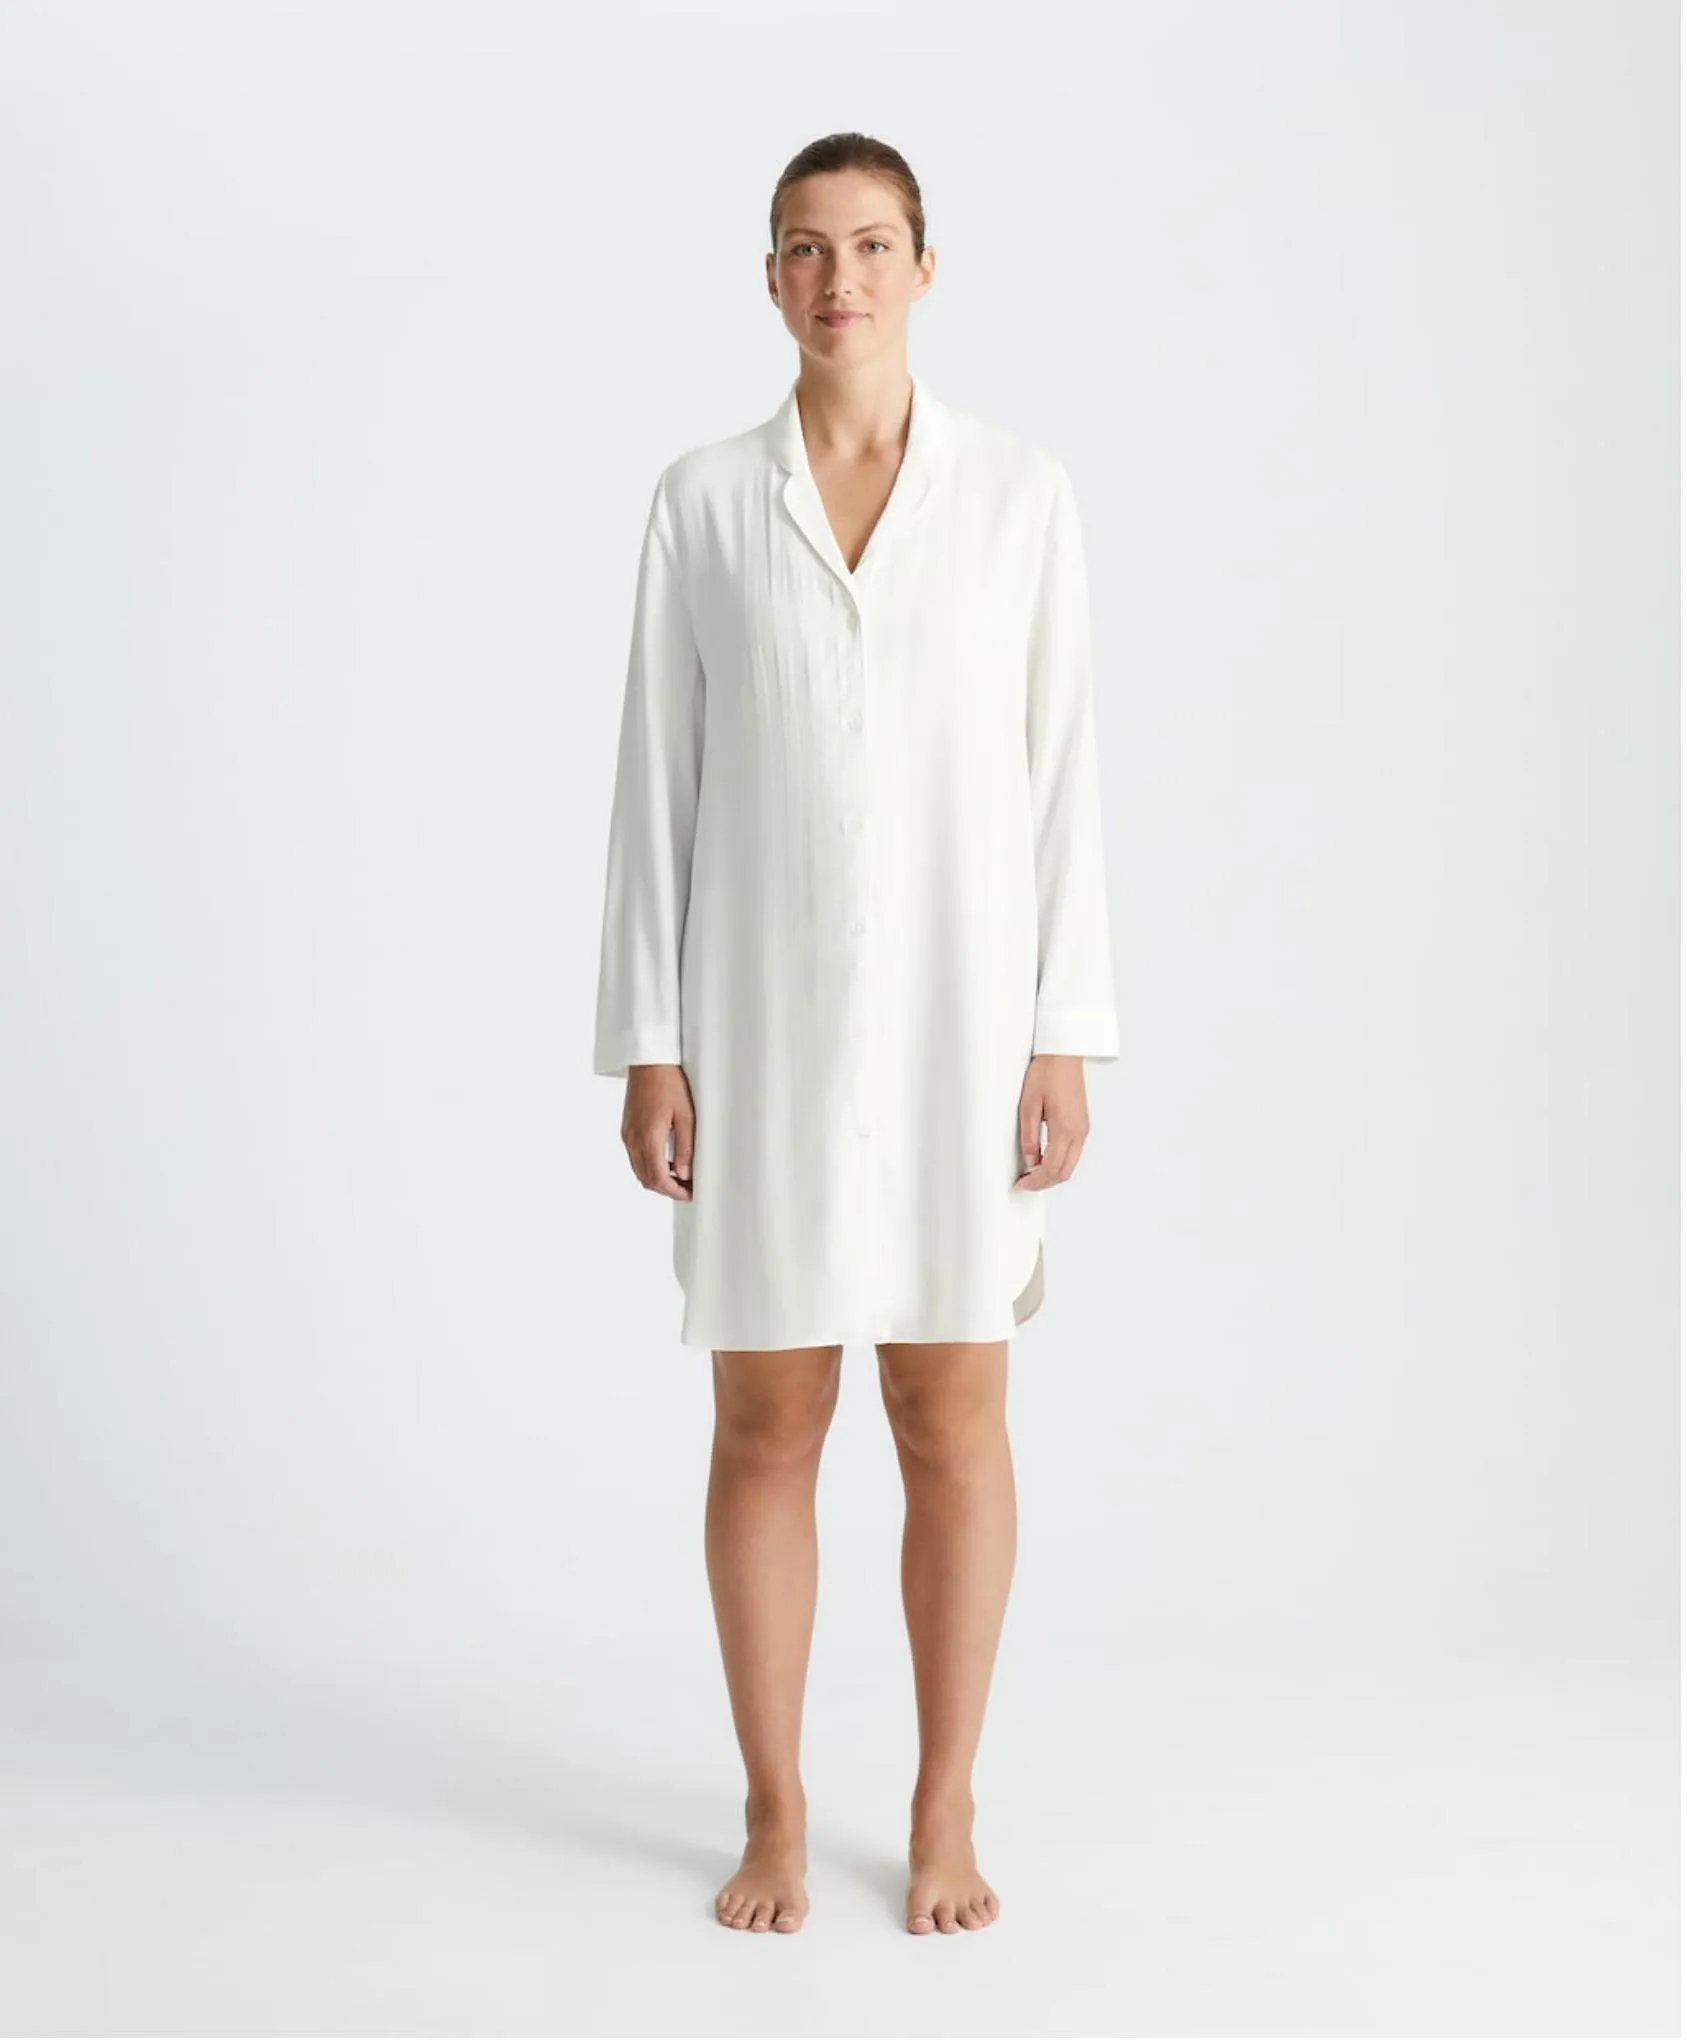 Catalogue Pyjamas et Homewear, page 00012